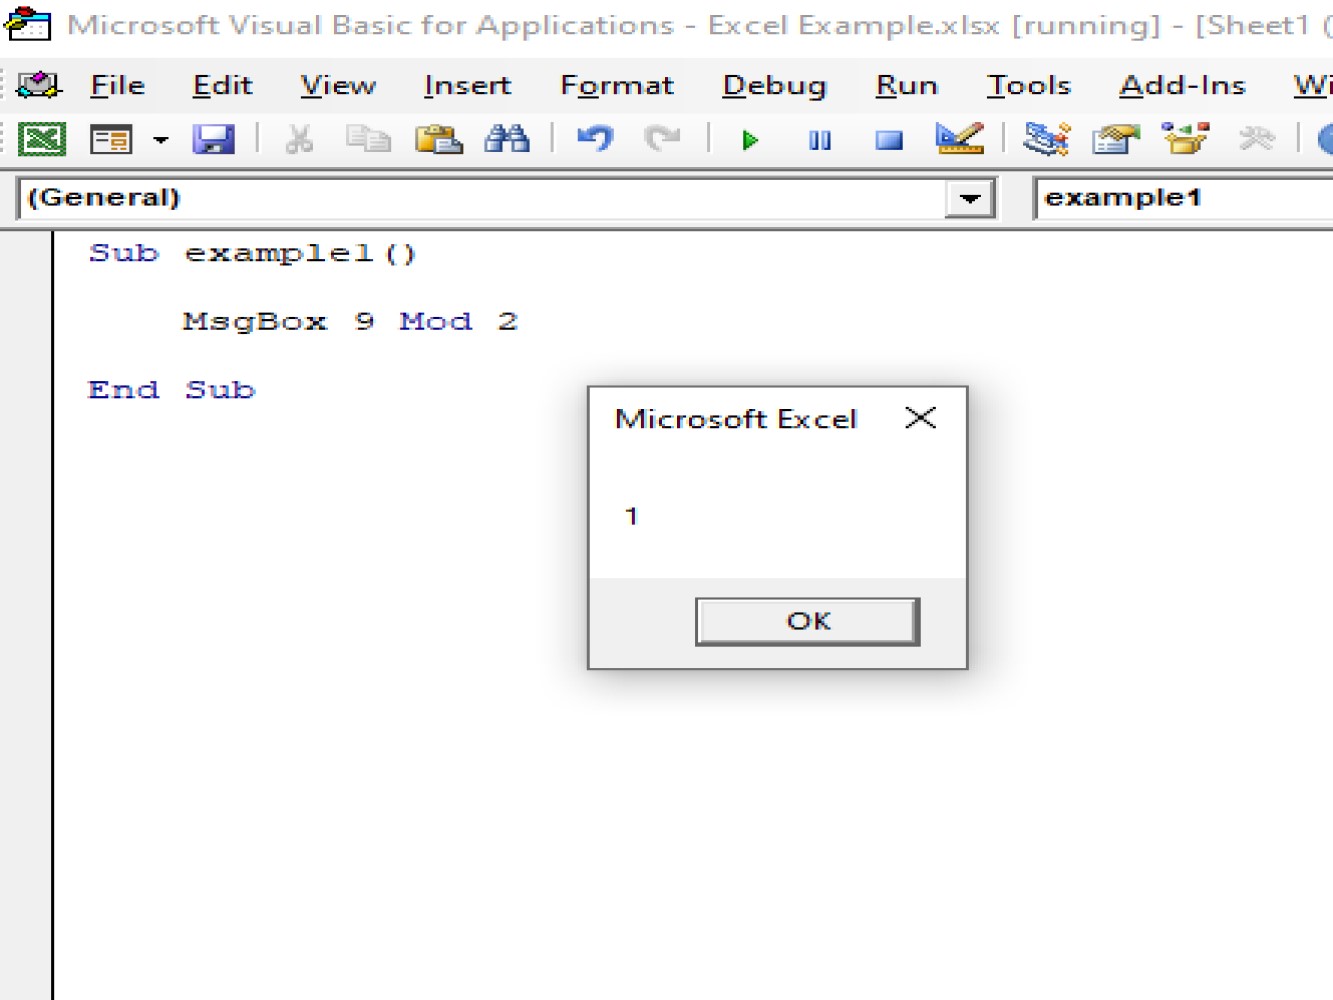 Screenshot of MOD shown on message box